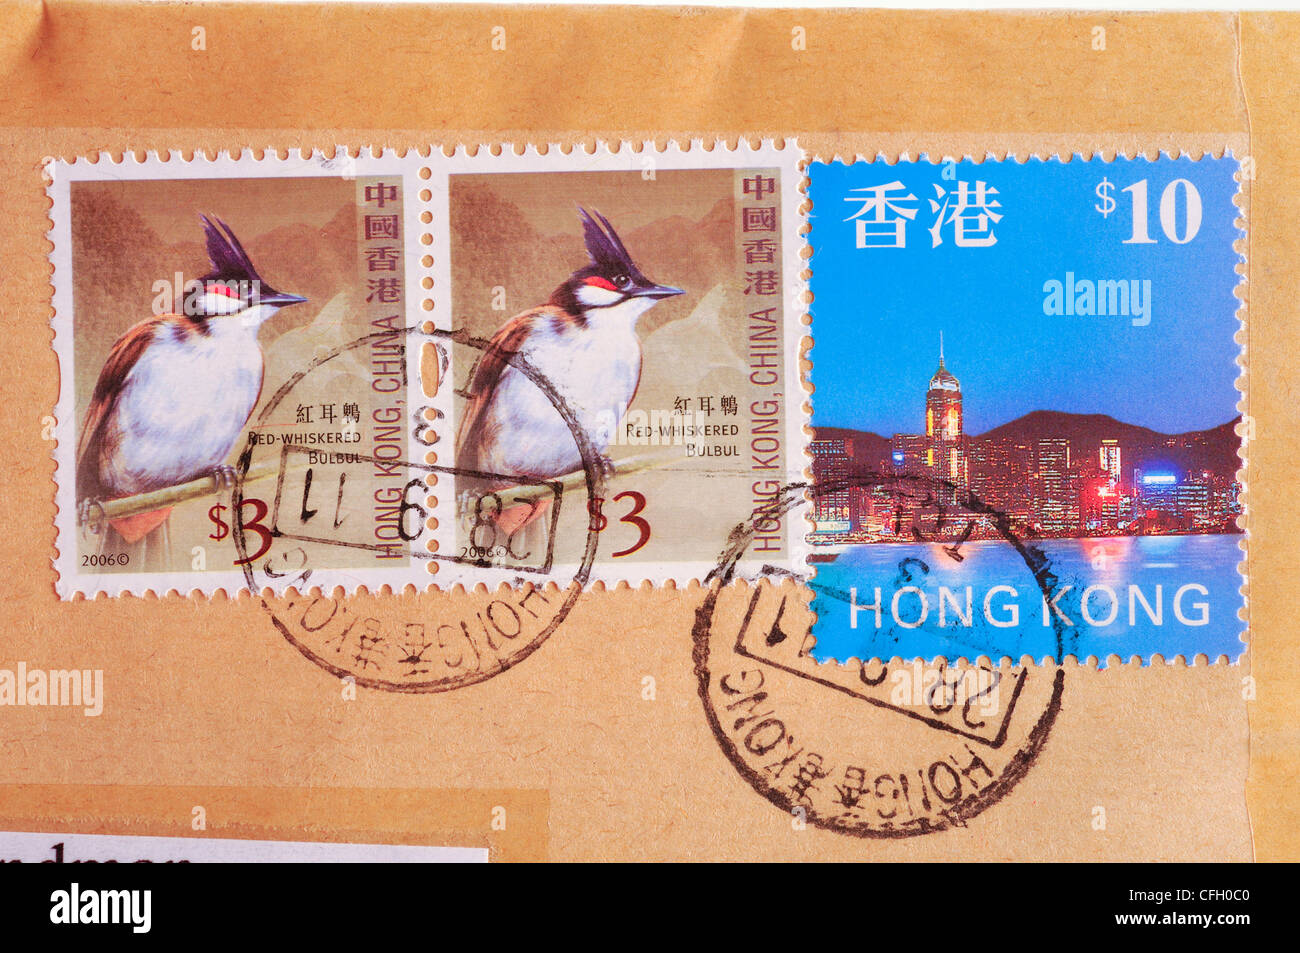 Hong Kong postage stamp Stock Photo